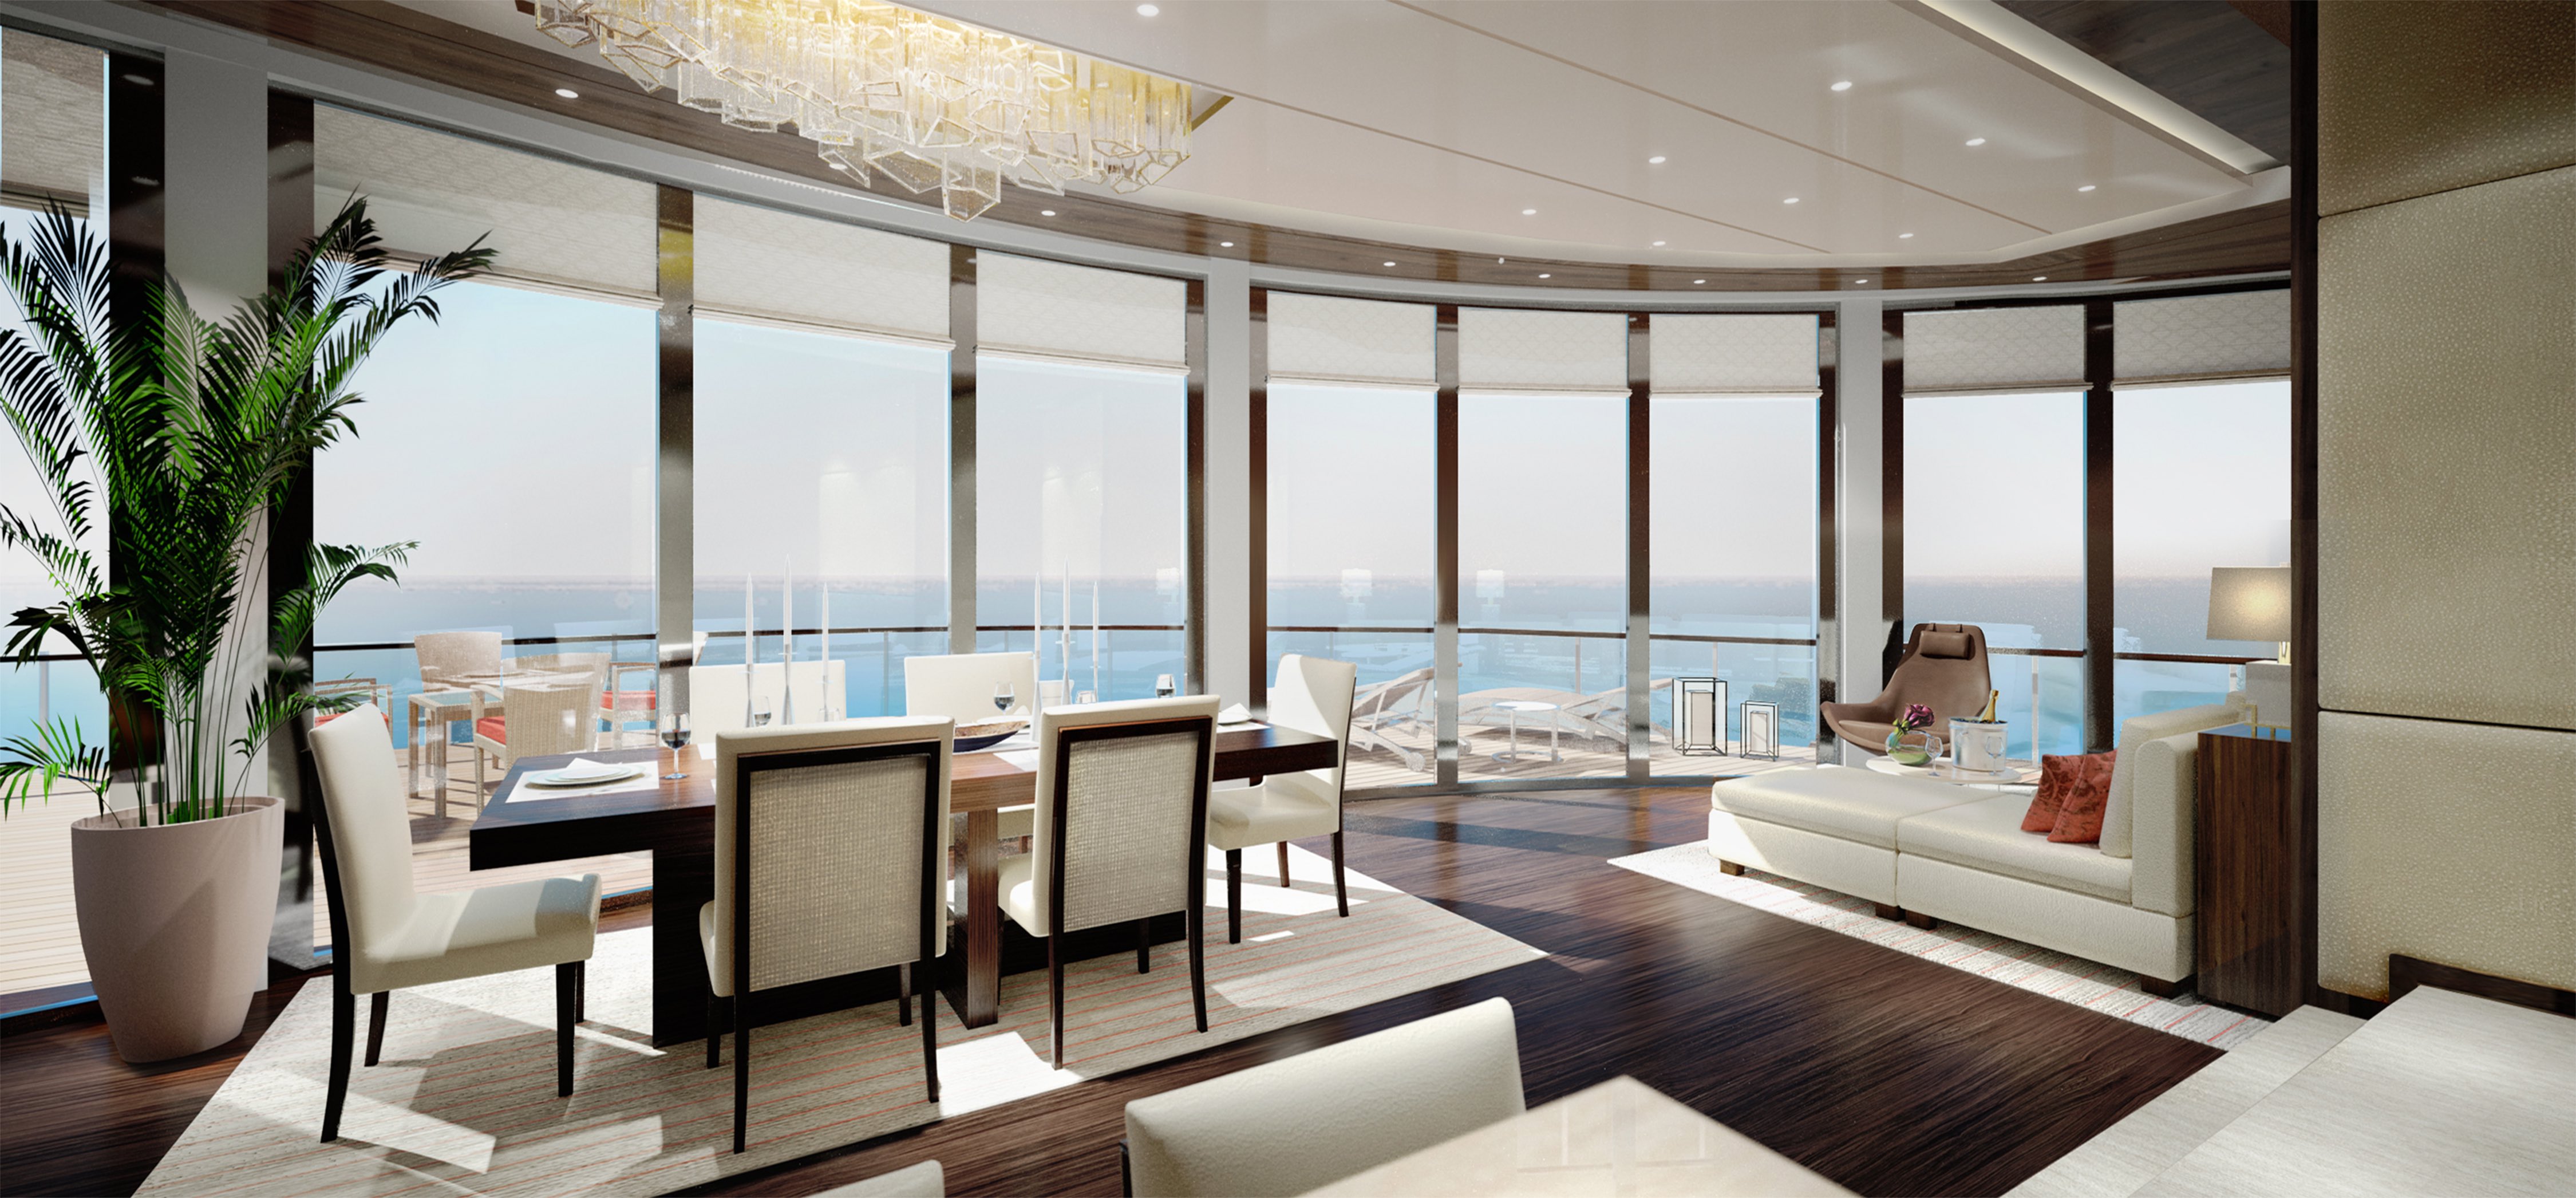 Owner's suite, Ritz-Carlton yacht